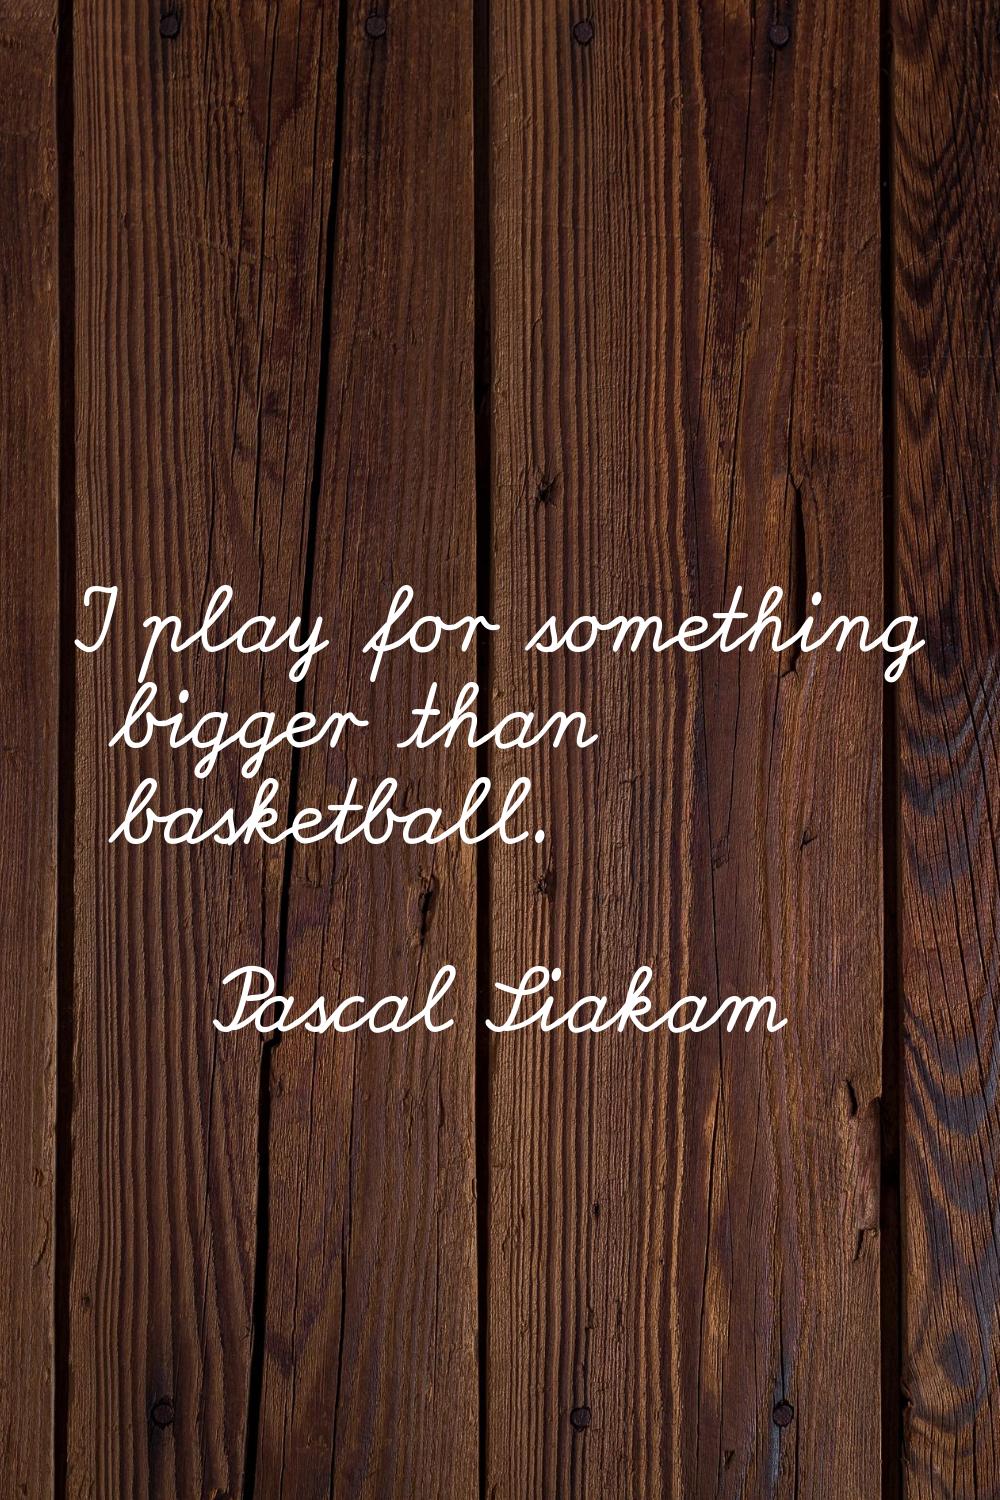 I play for something bigger than basketball.